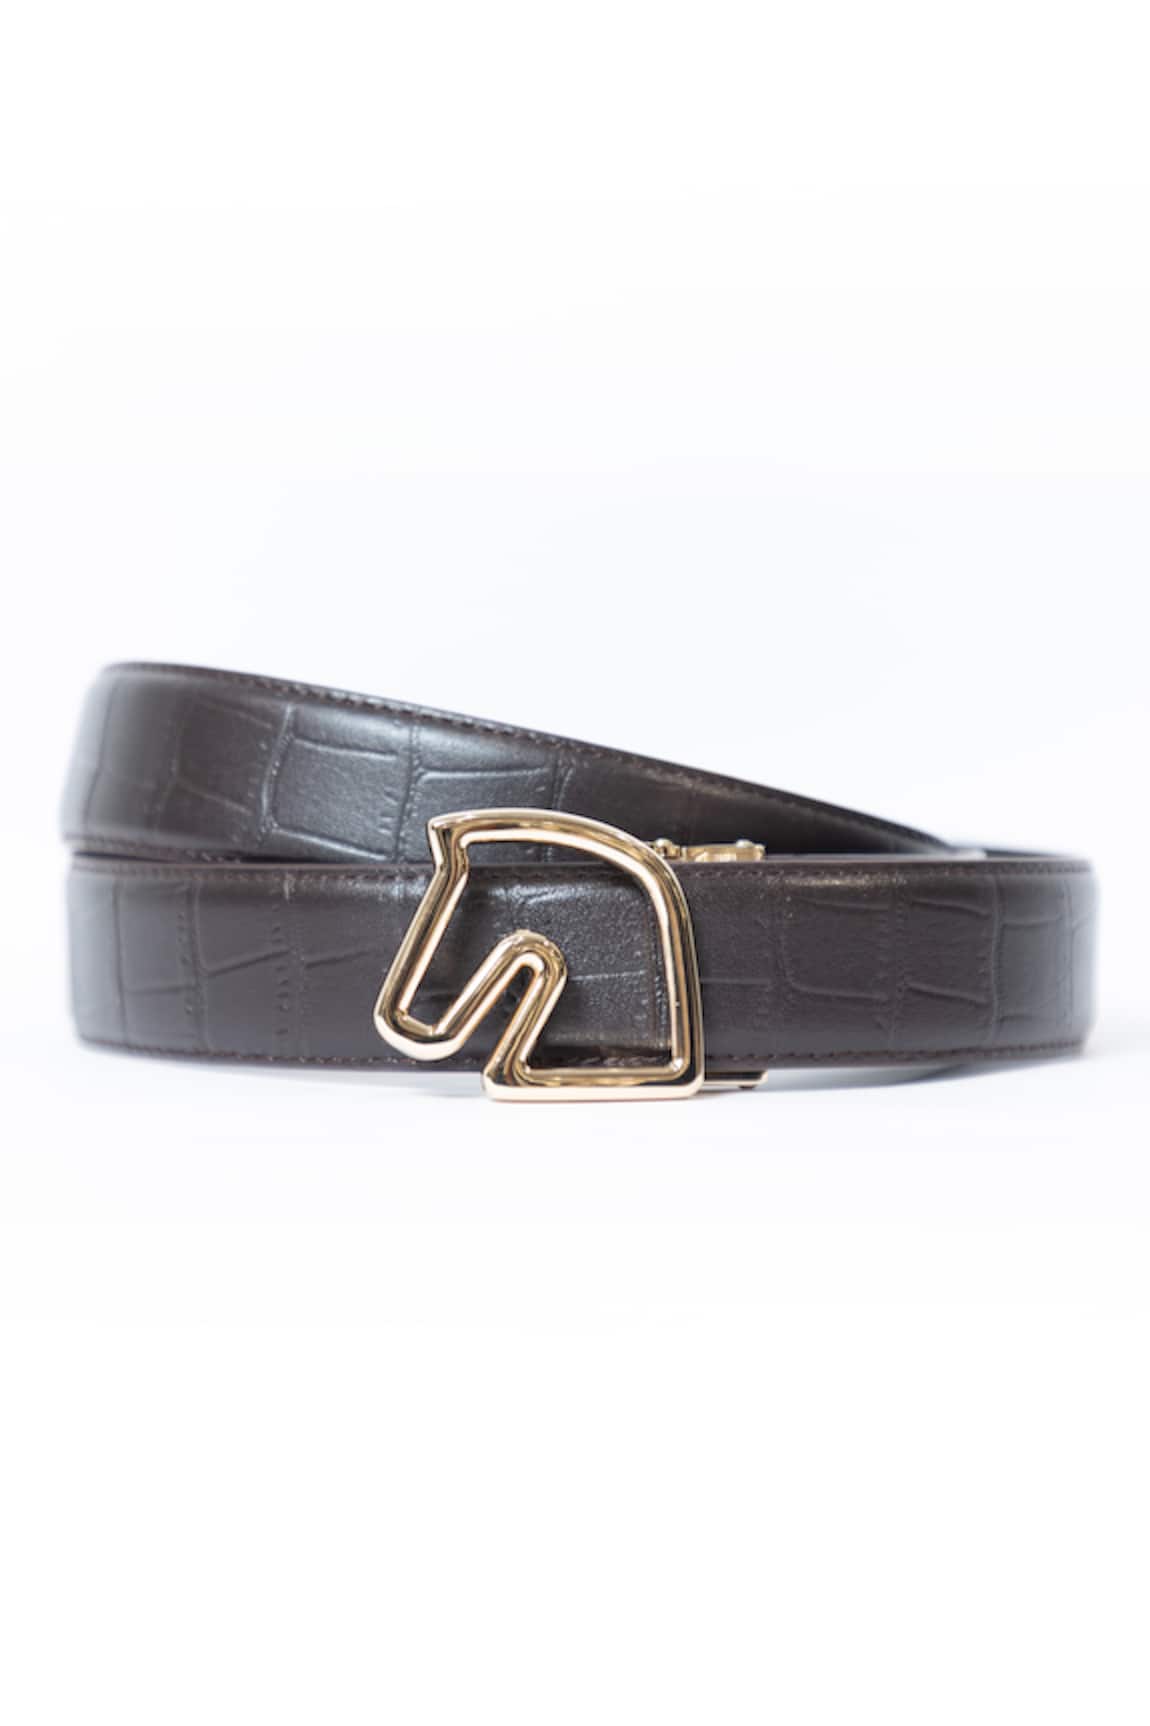 Vantier Croc Leather Horse Buckled Belt